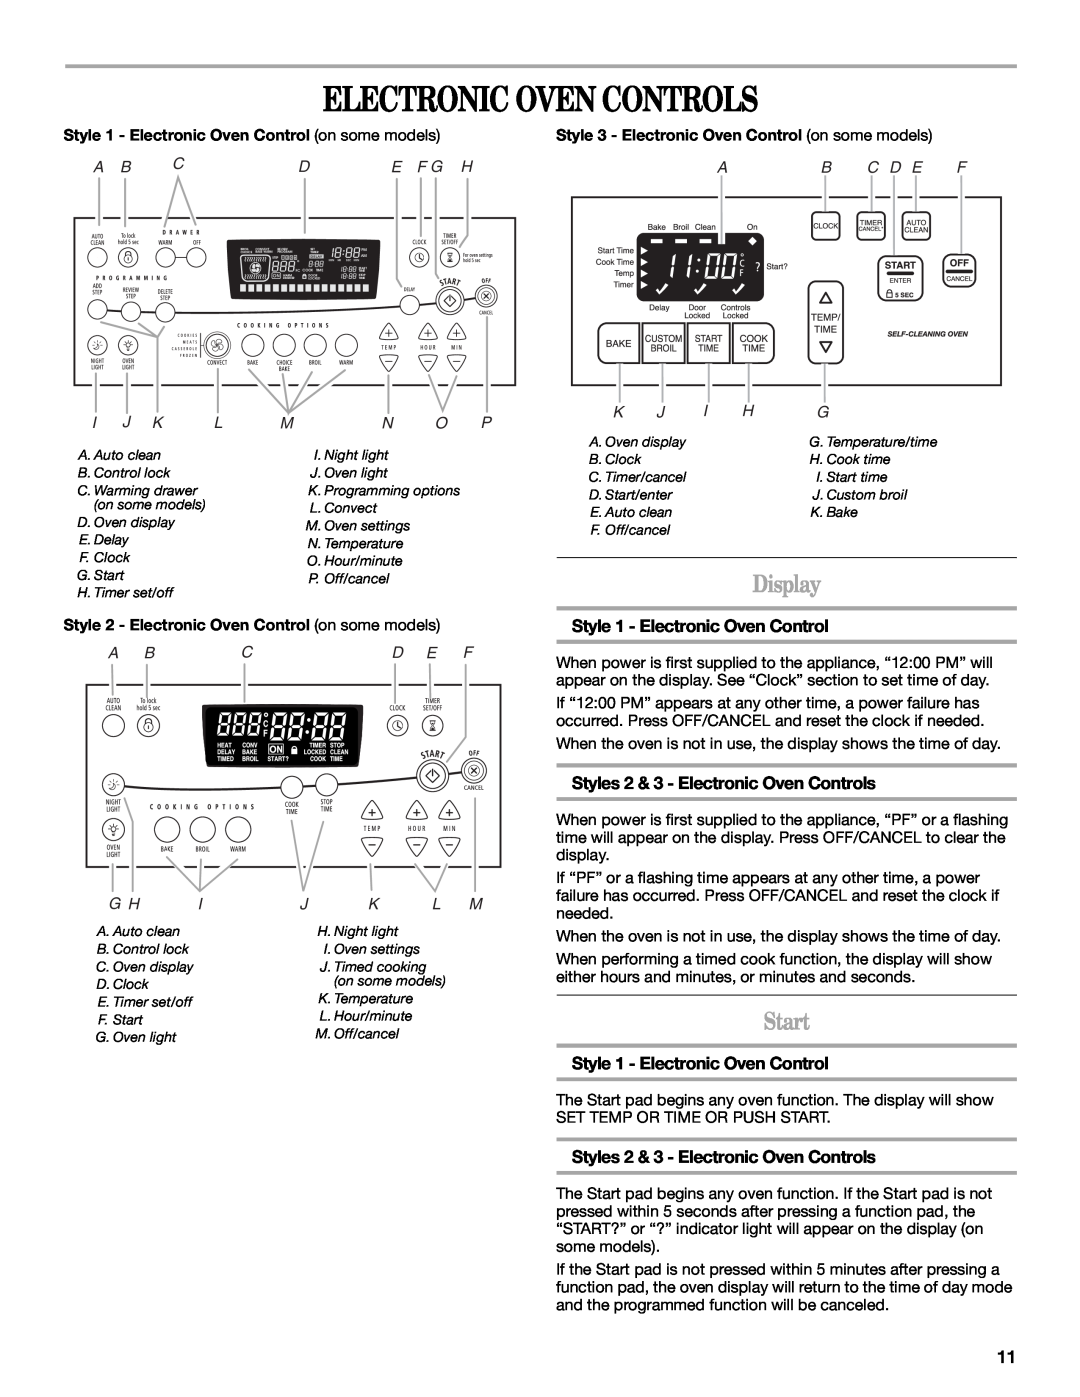 Whirlpool 9761862 Electronic Oven Controls, Display, Start, Style 1 - Electronic Oven Control, E F G H, C D E, A Bcd E F 